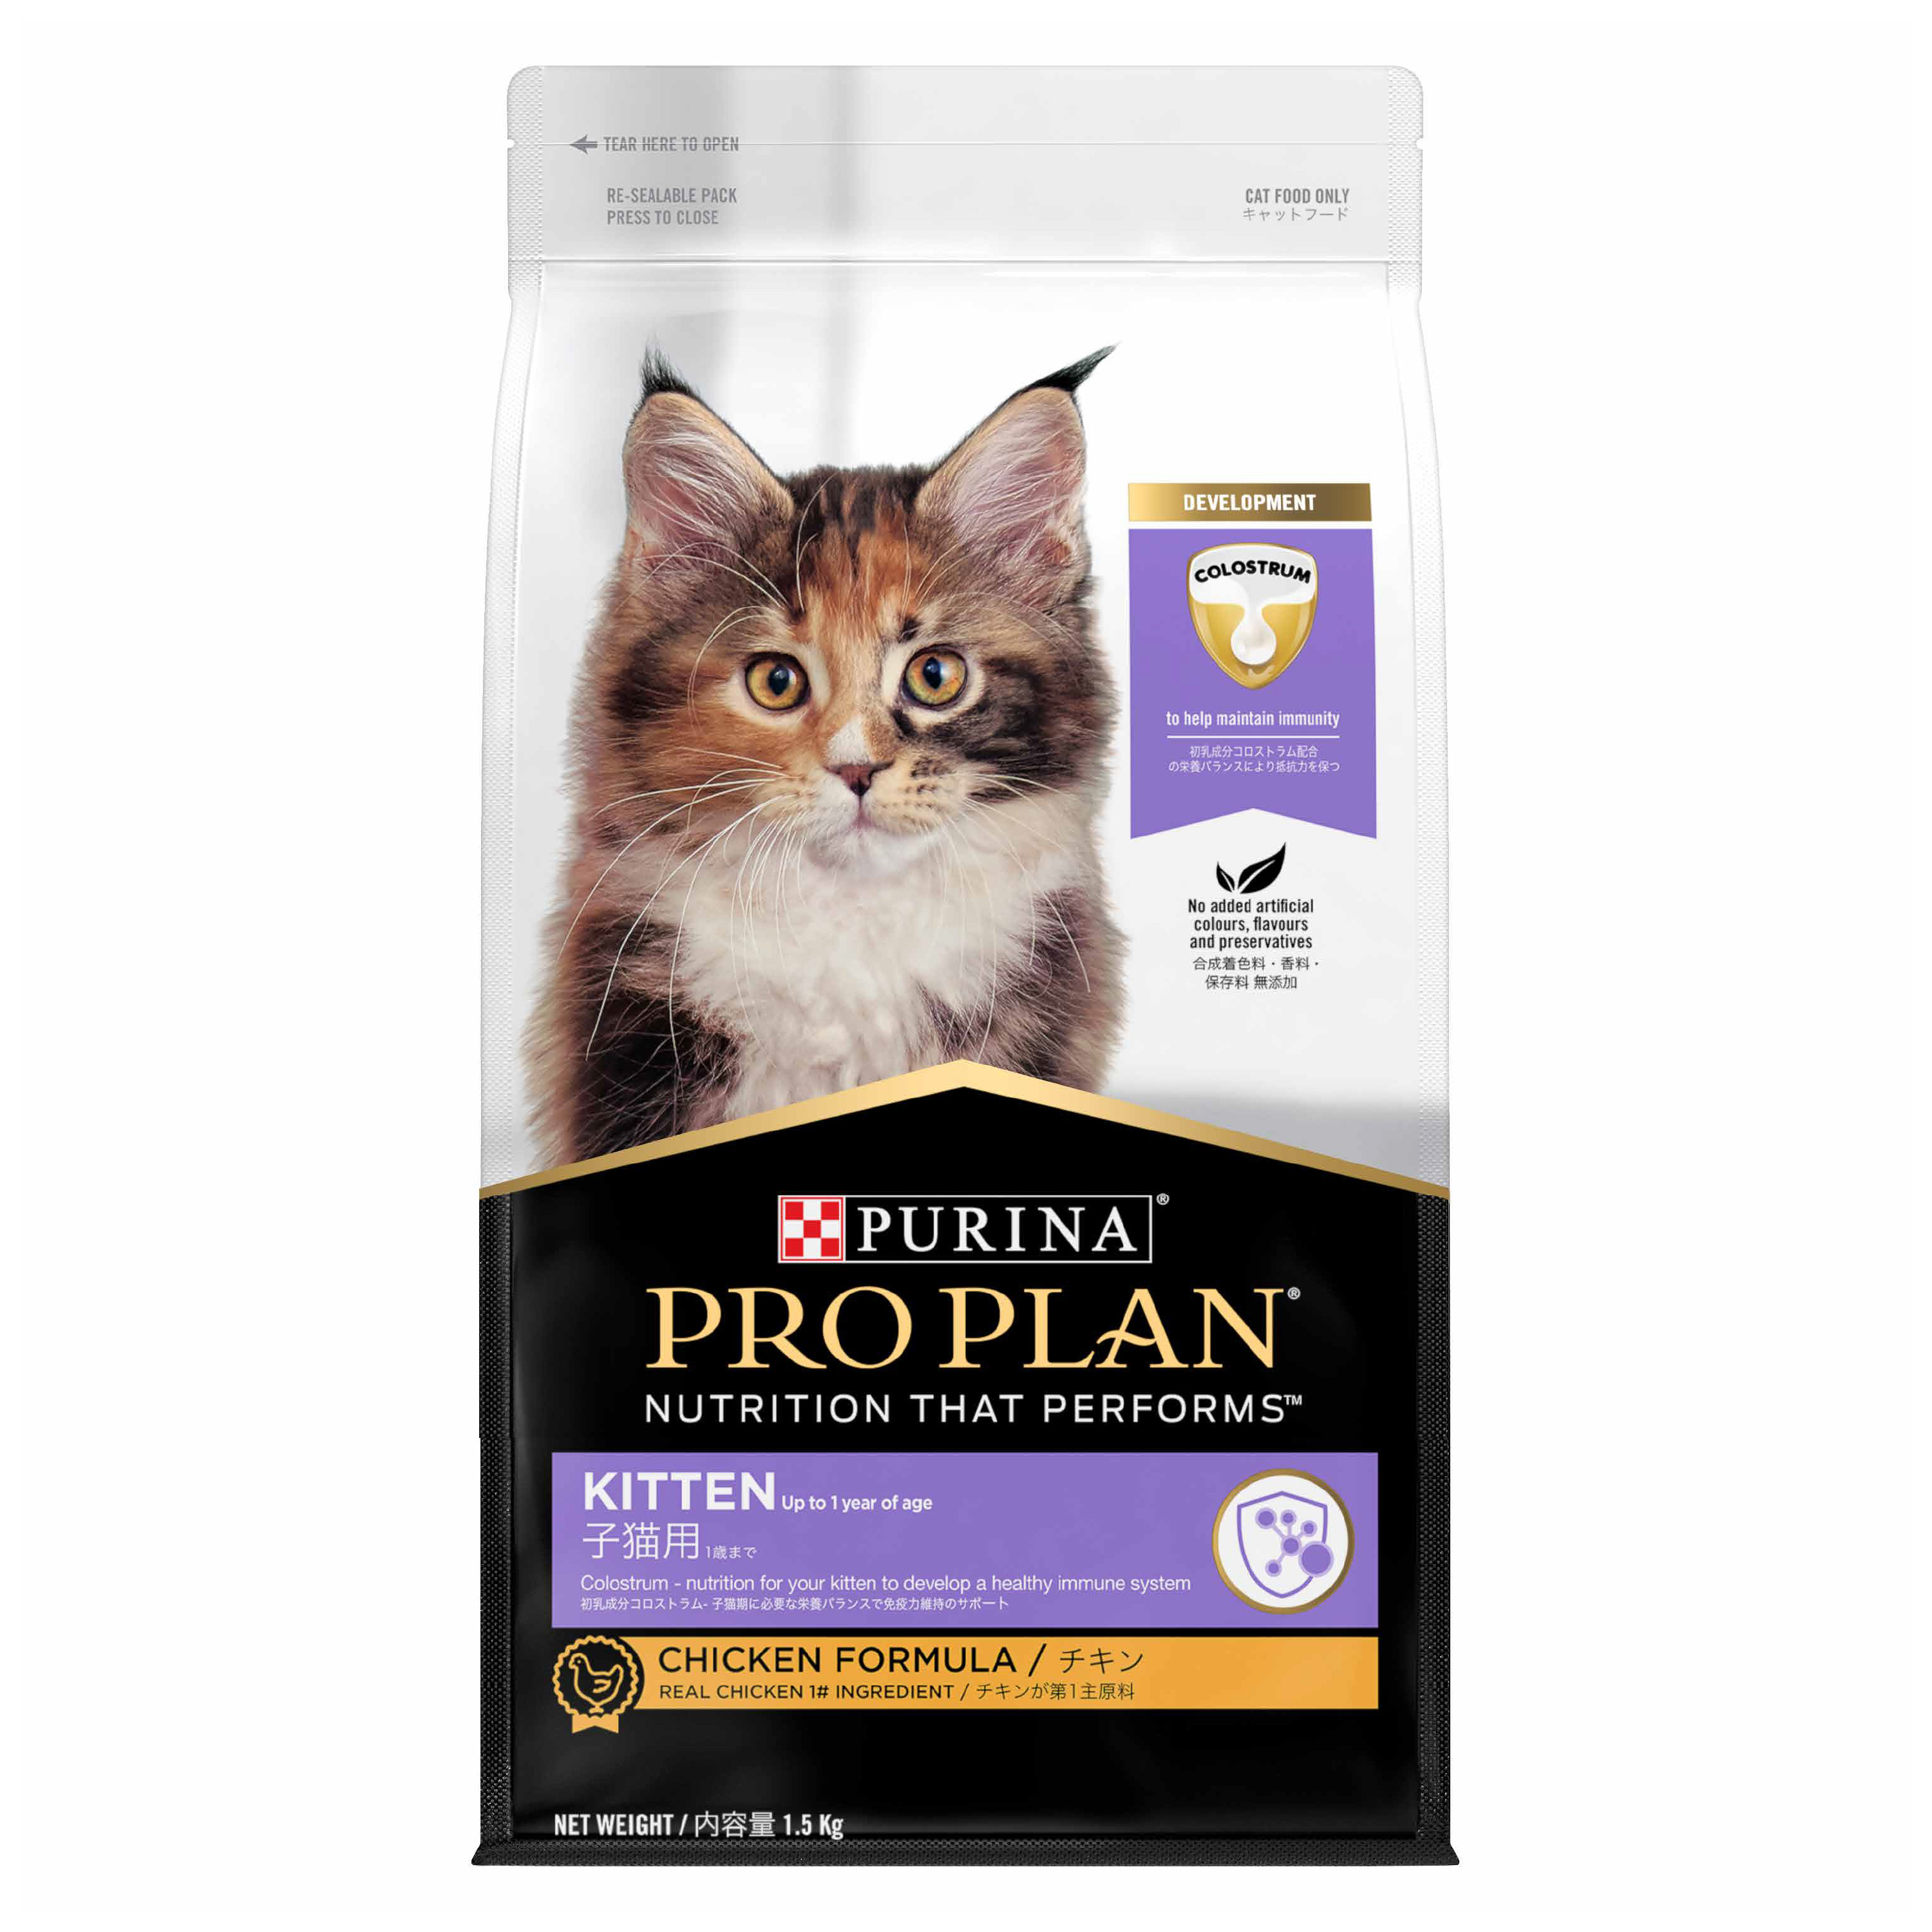 PROPLAN® KITTEN CHICKENอาหารลูกแมวทุกสายพันธุ์ สำหรับลูกแมวหลังหย่านม 4 สัปดาห์ - 1 ปี สูตรไก่